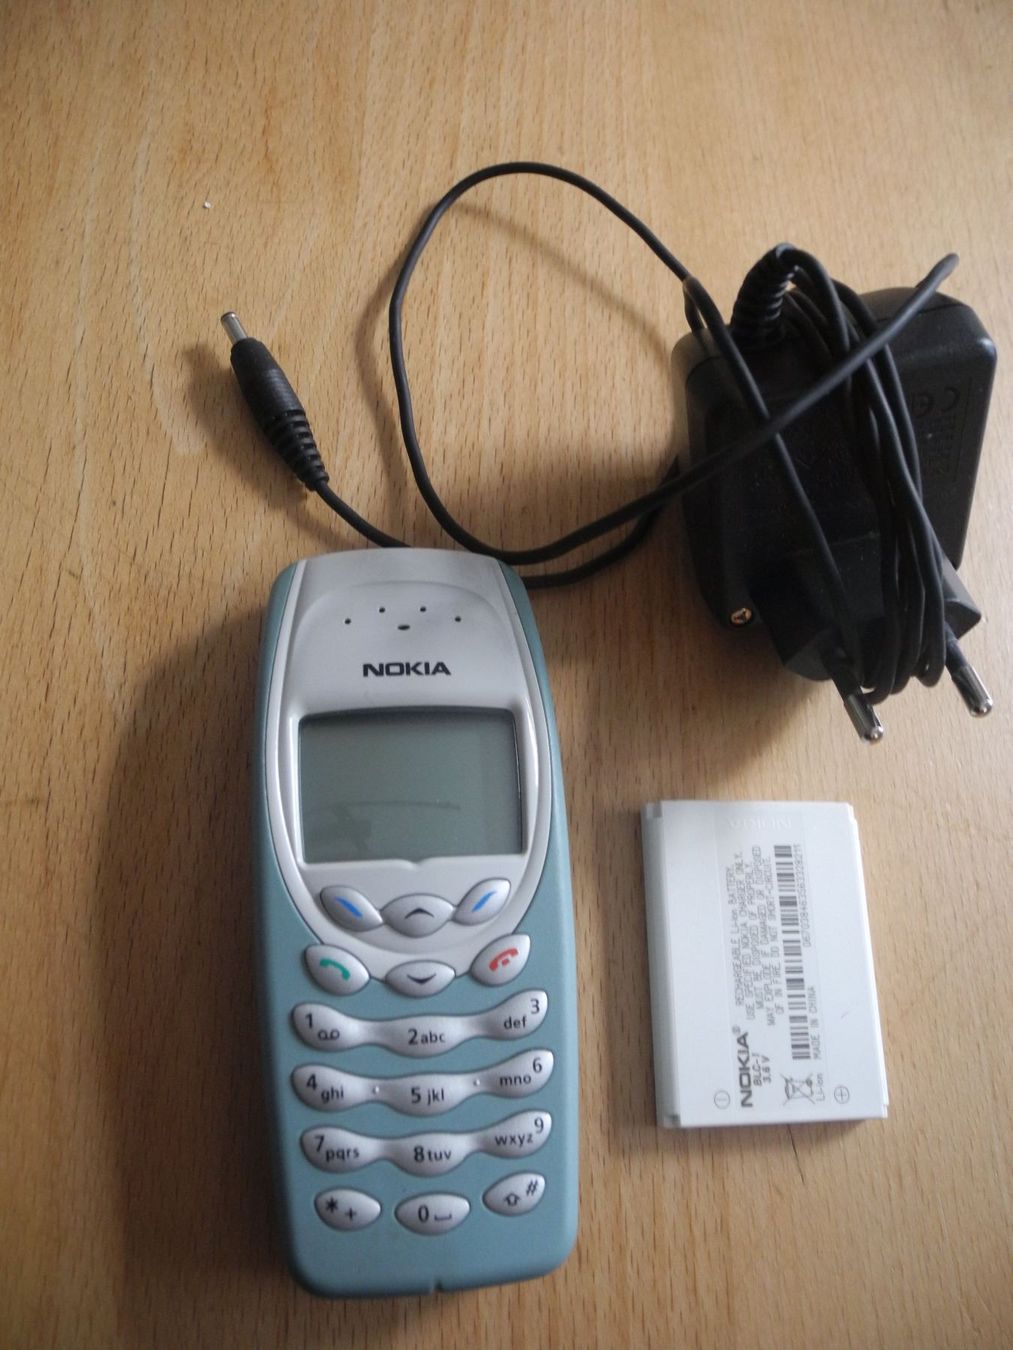 Nokia Handy Kult Antik Alt Akku kaufen auf Ricardo